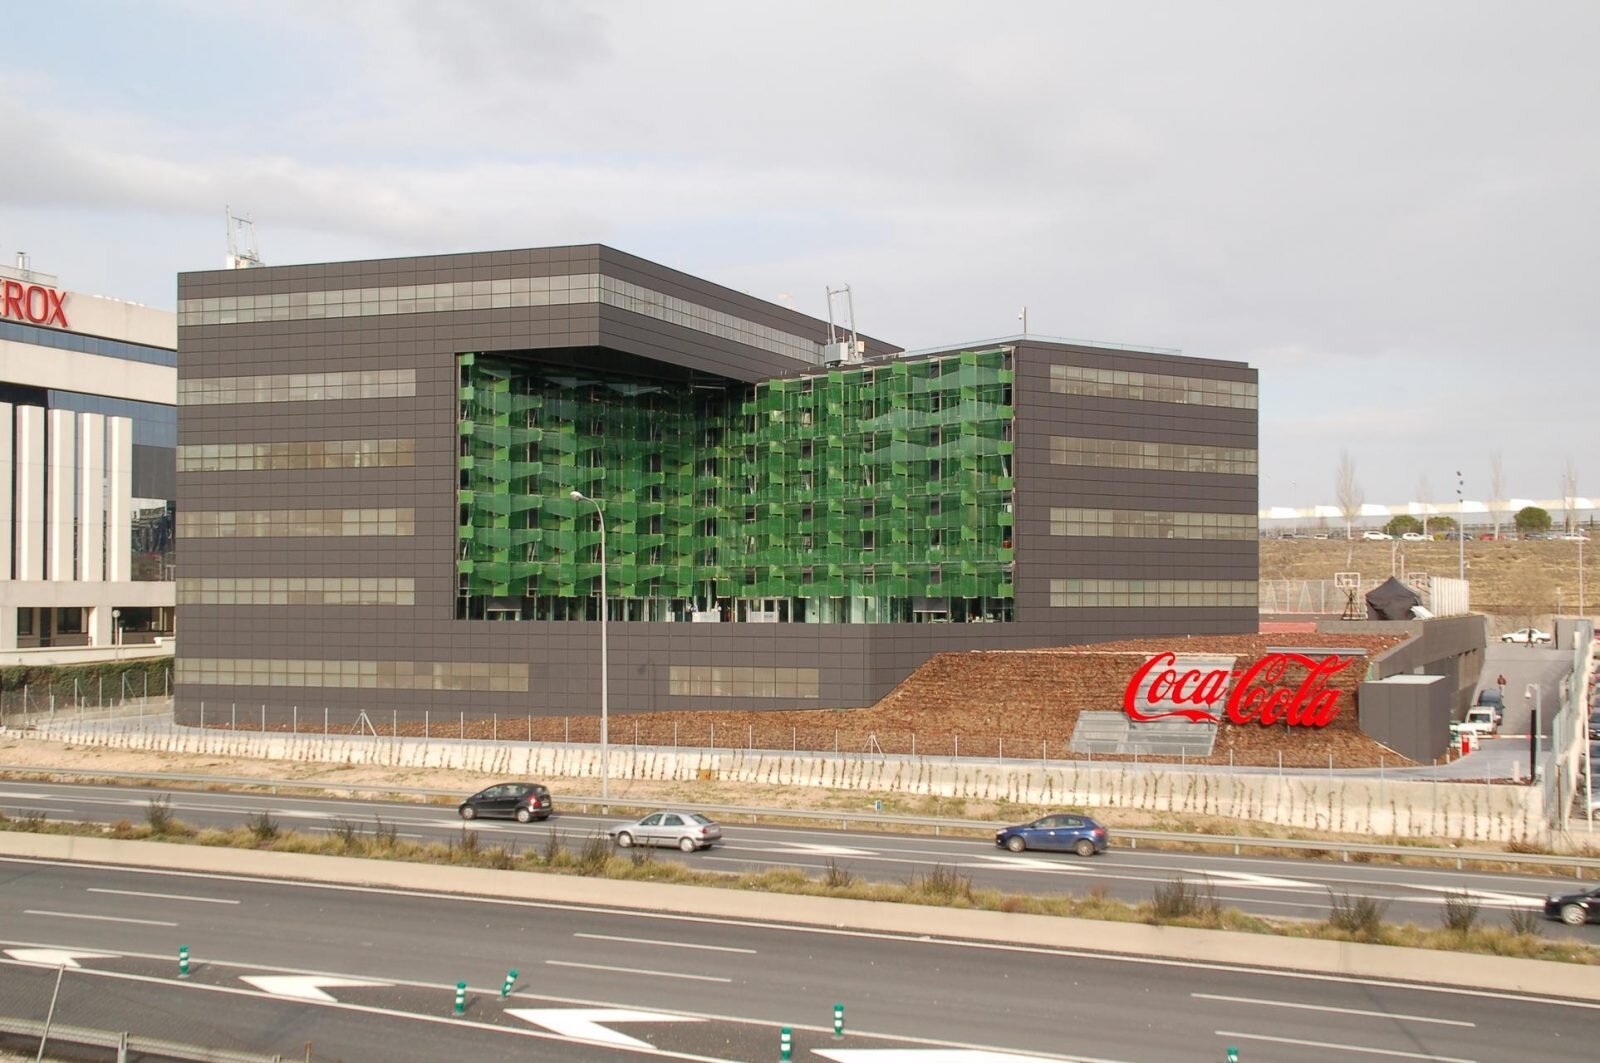 More information about "Μαδρίτη: Σε πάρκο logistics μετατρέπονται οι πρώην εγκαταστάσεις της Coca Cola"